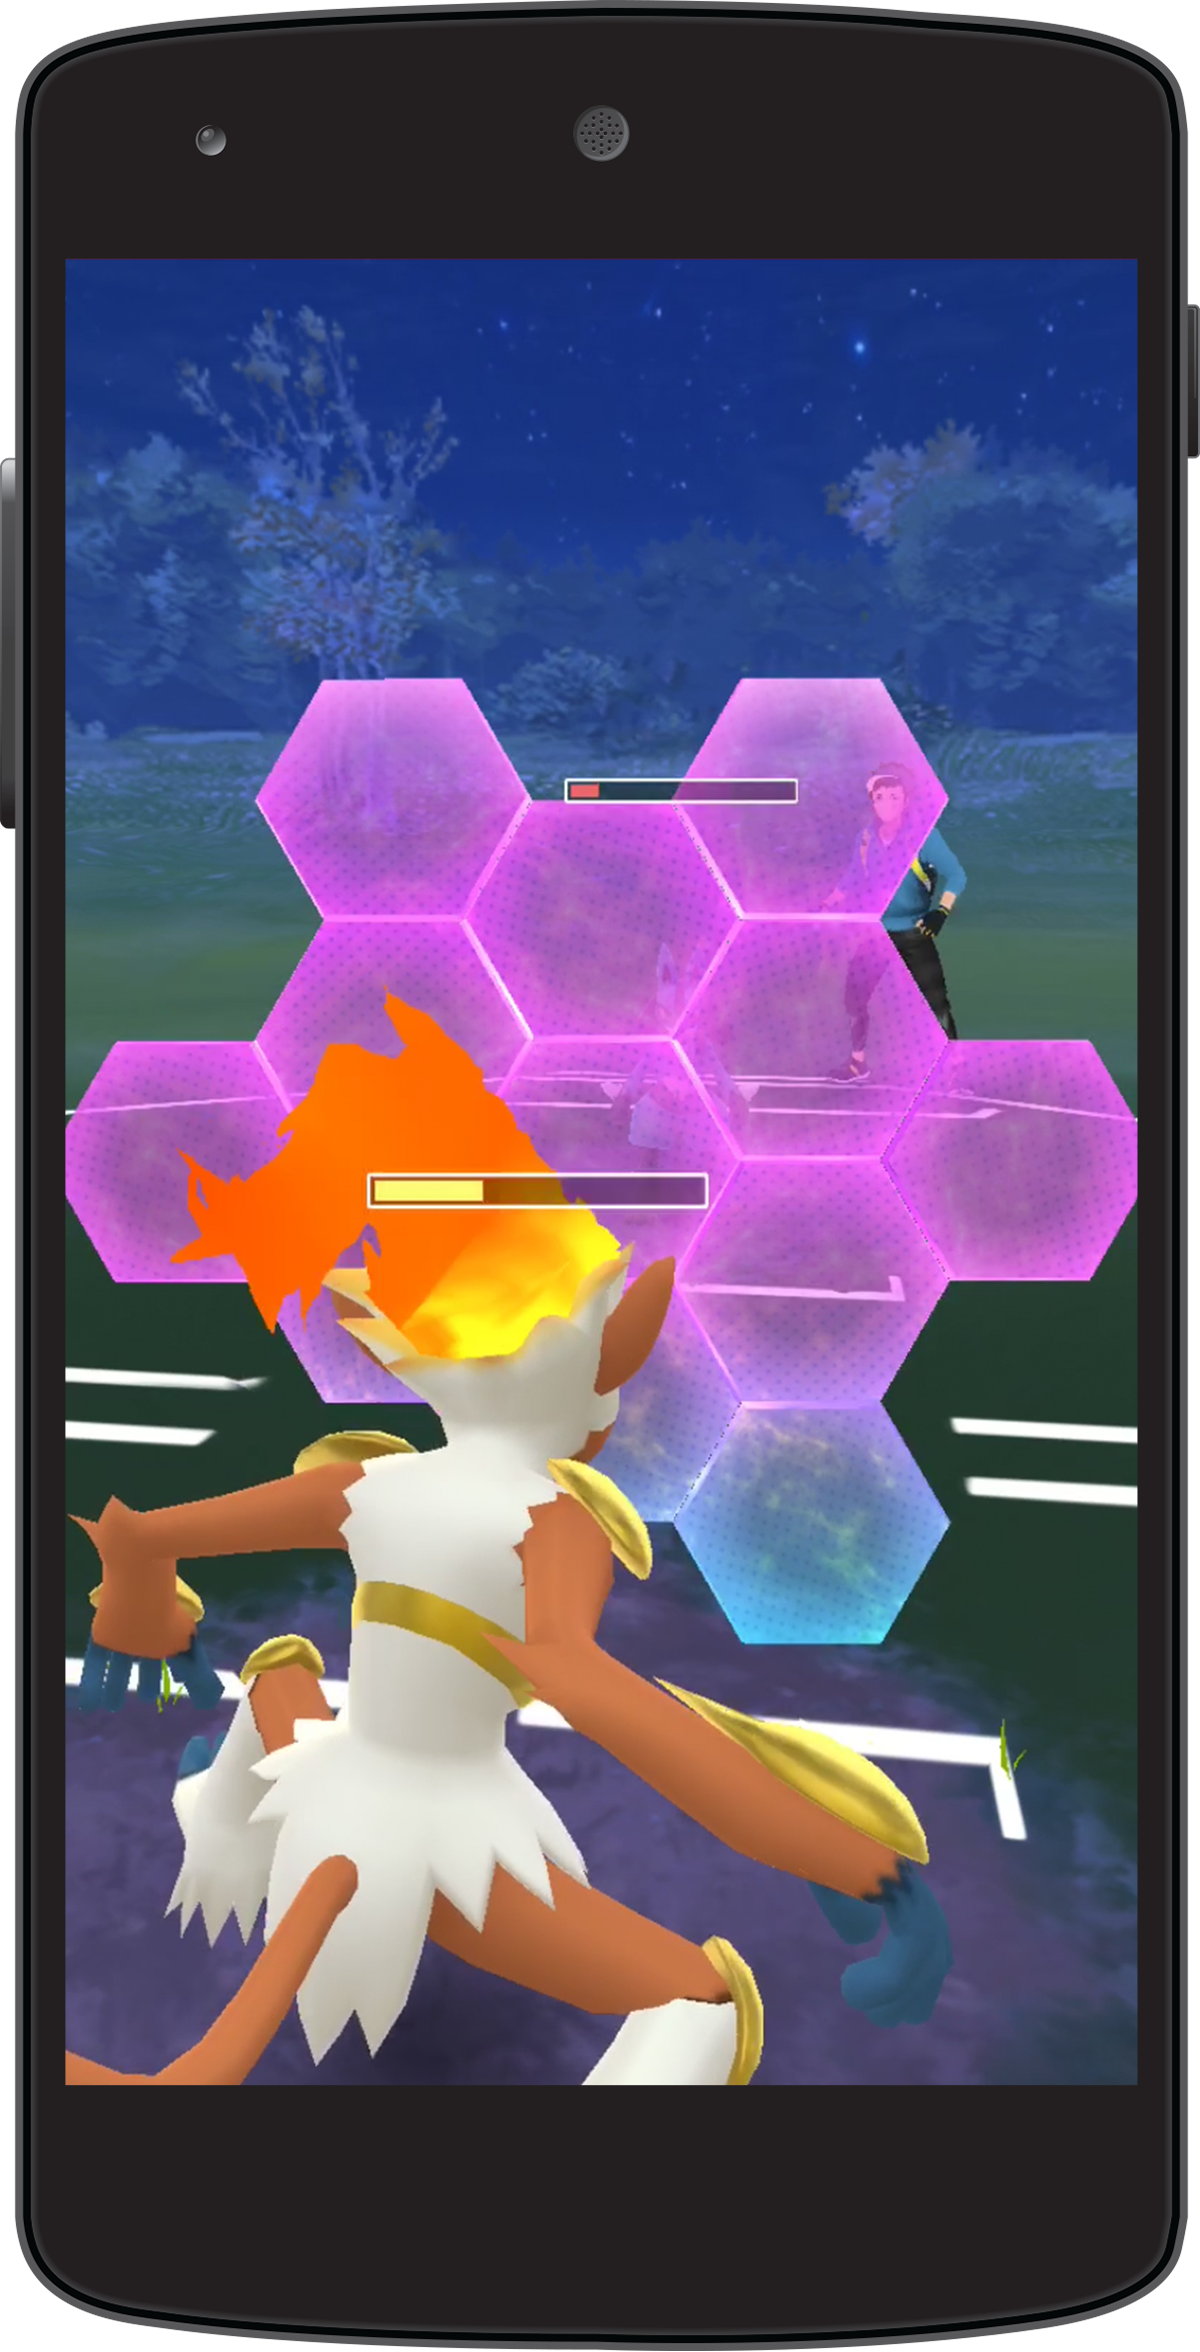 A trainer battle in Pokémon Go